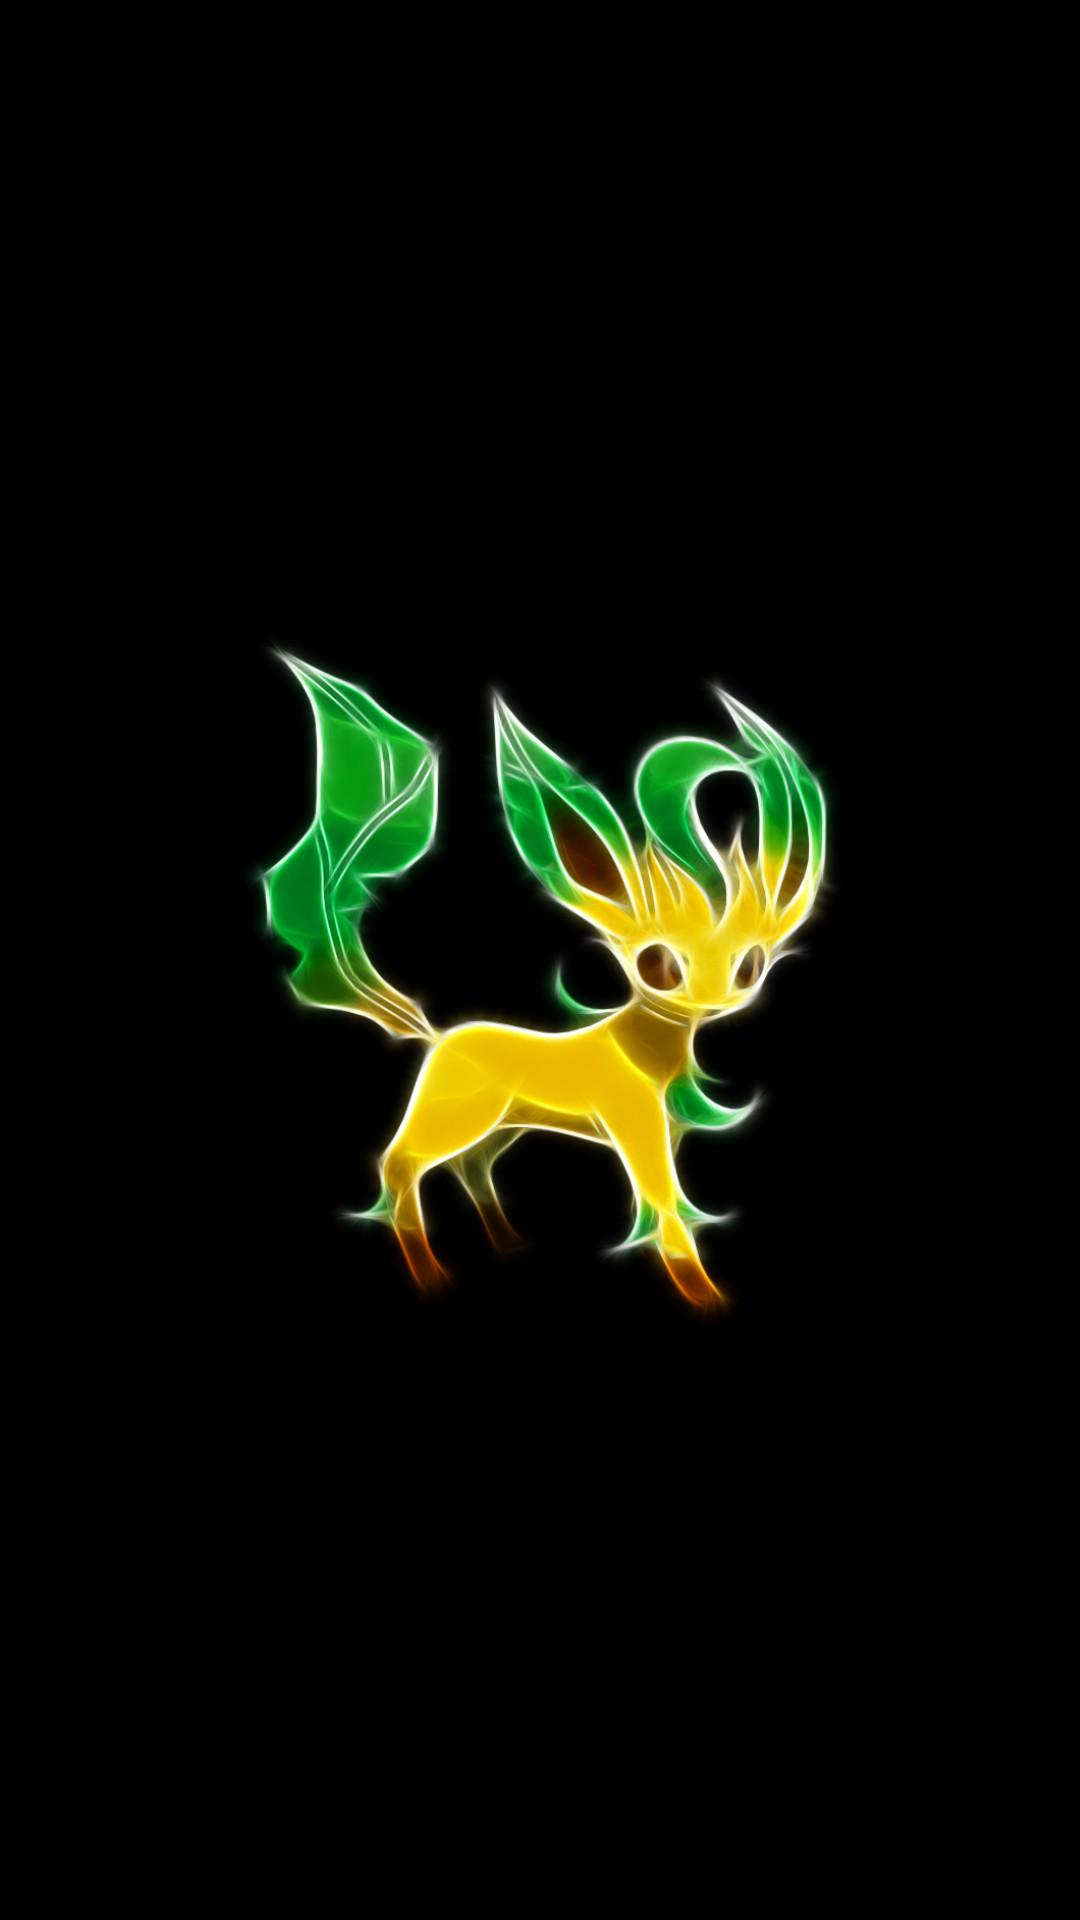 1080x1920 ... Neon Eevee from Pokemon Game mobile wallpaper